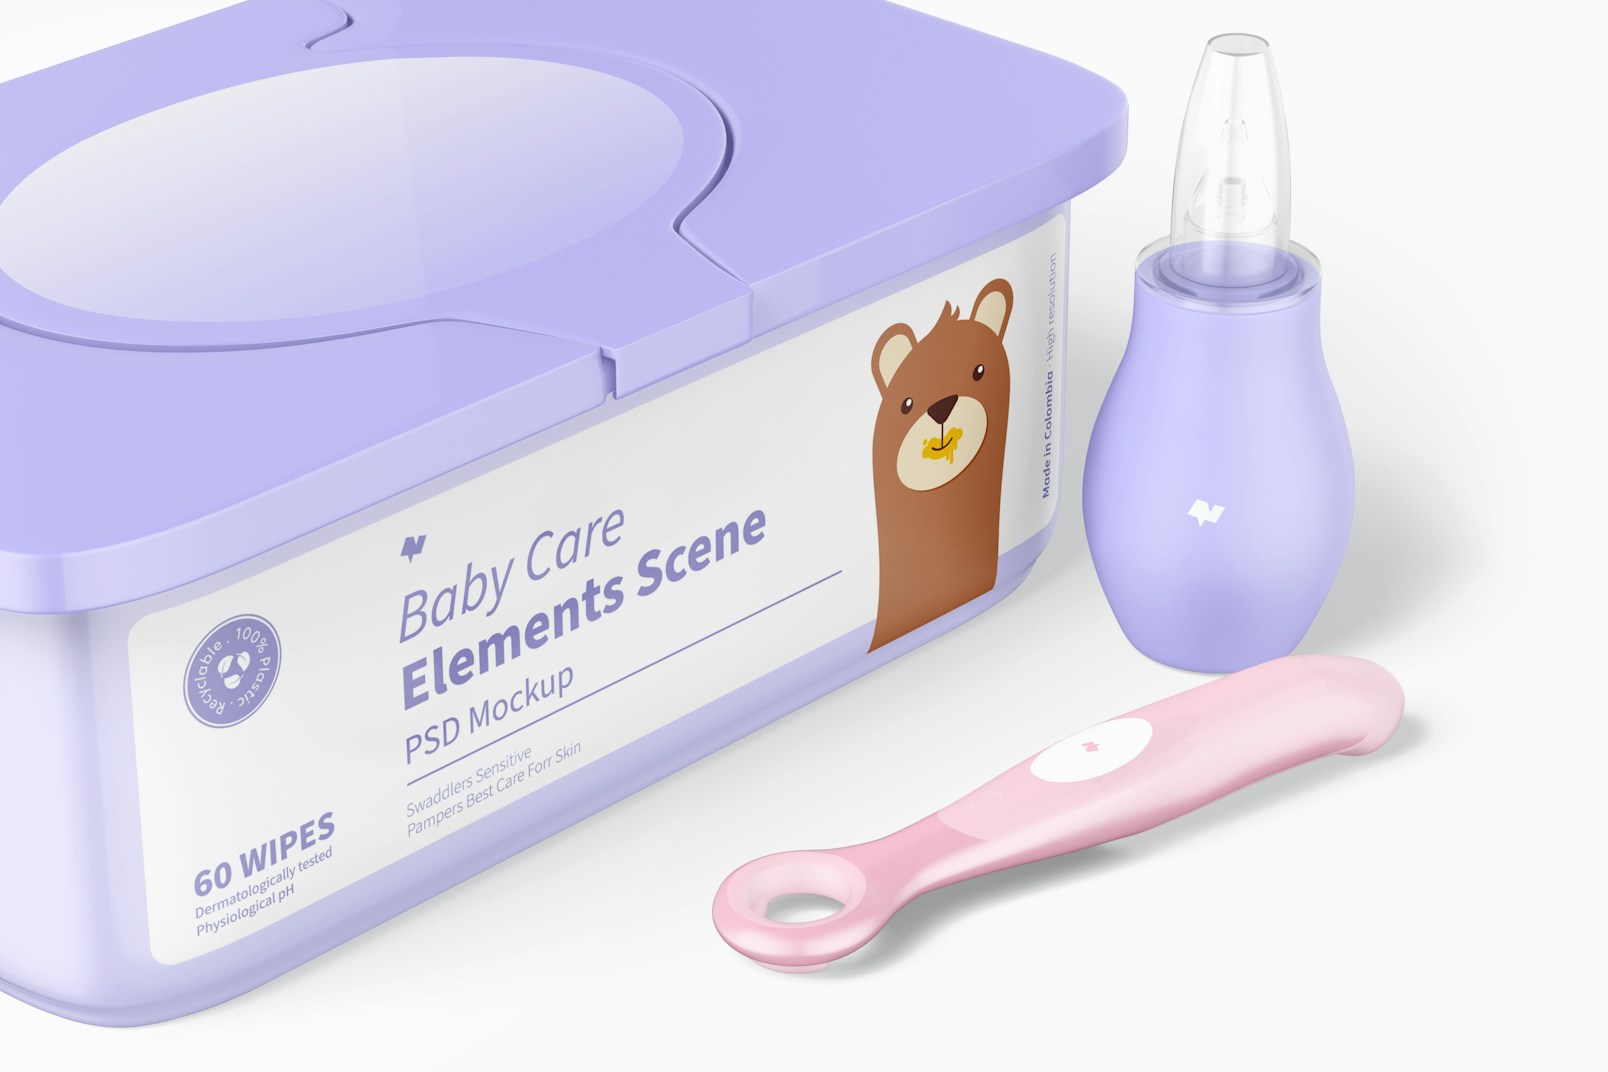 Baby Care Elements Scene Mockup, Close Up